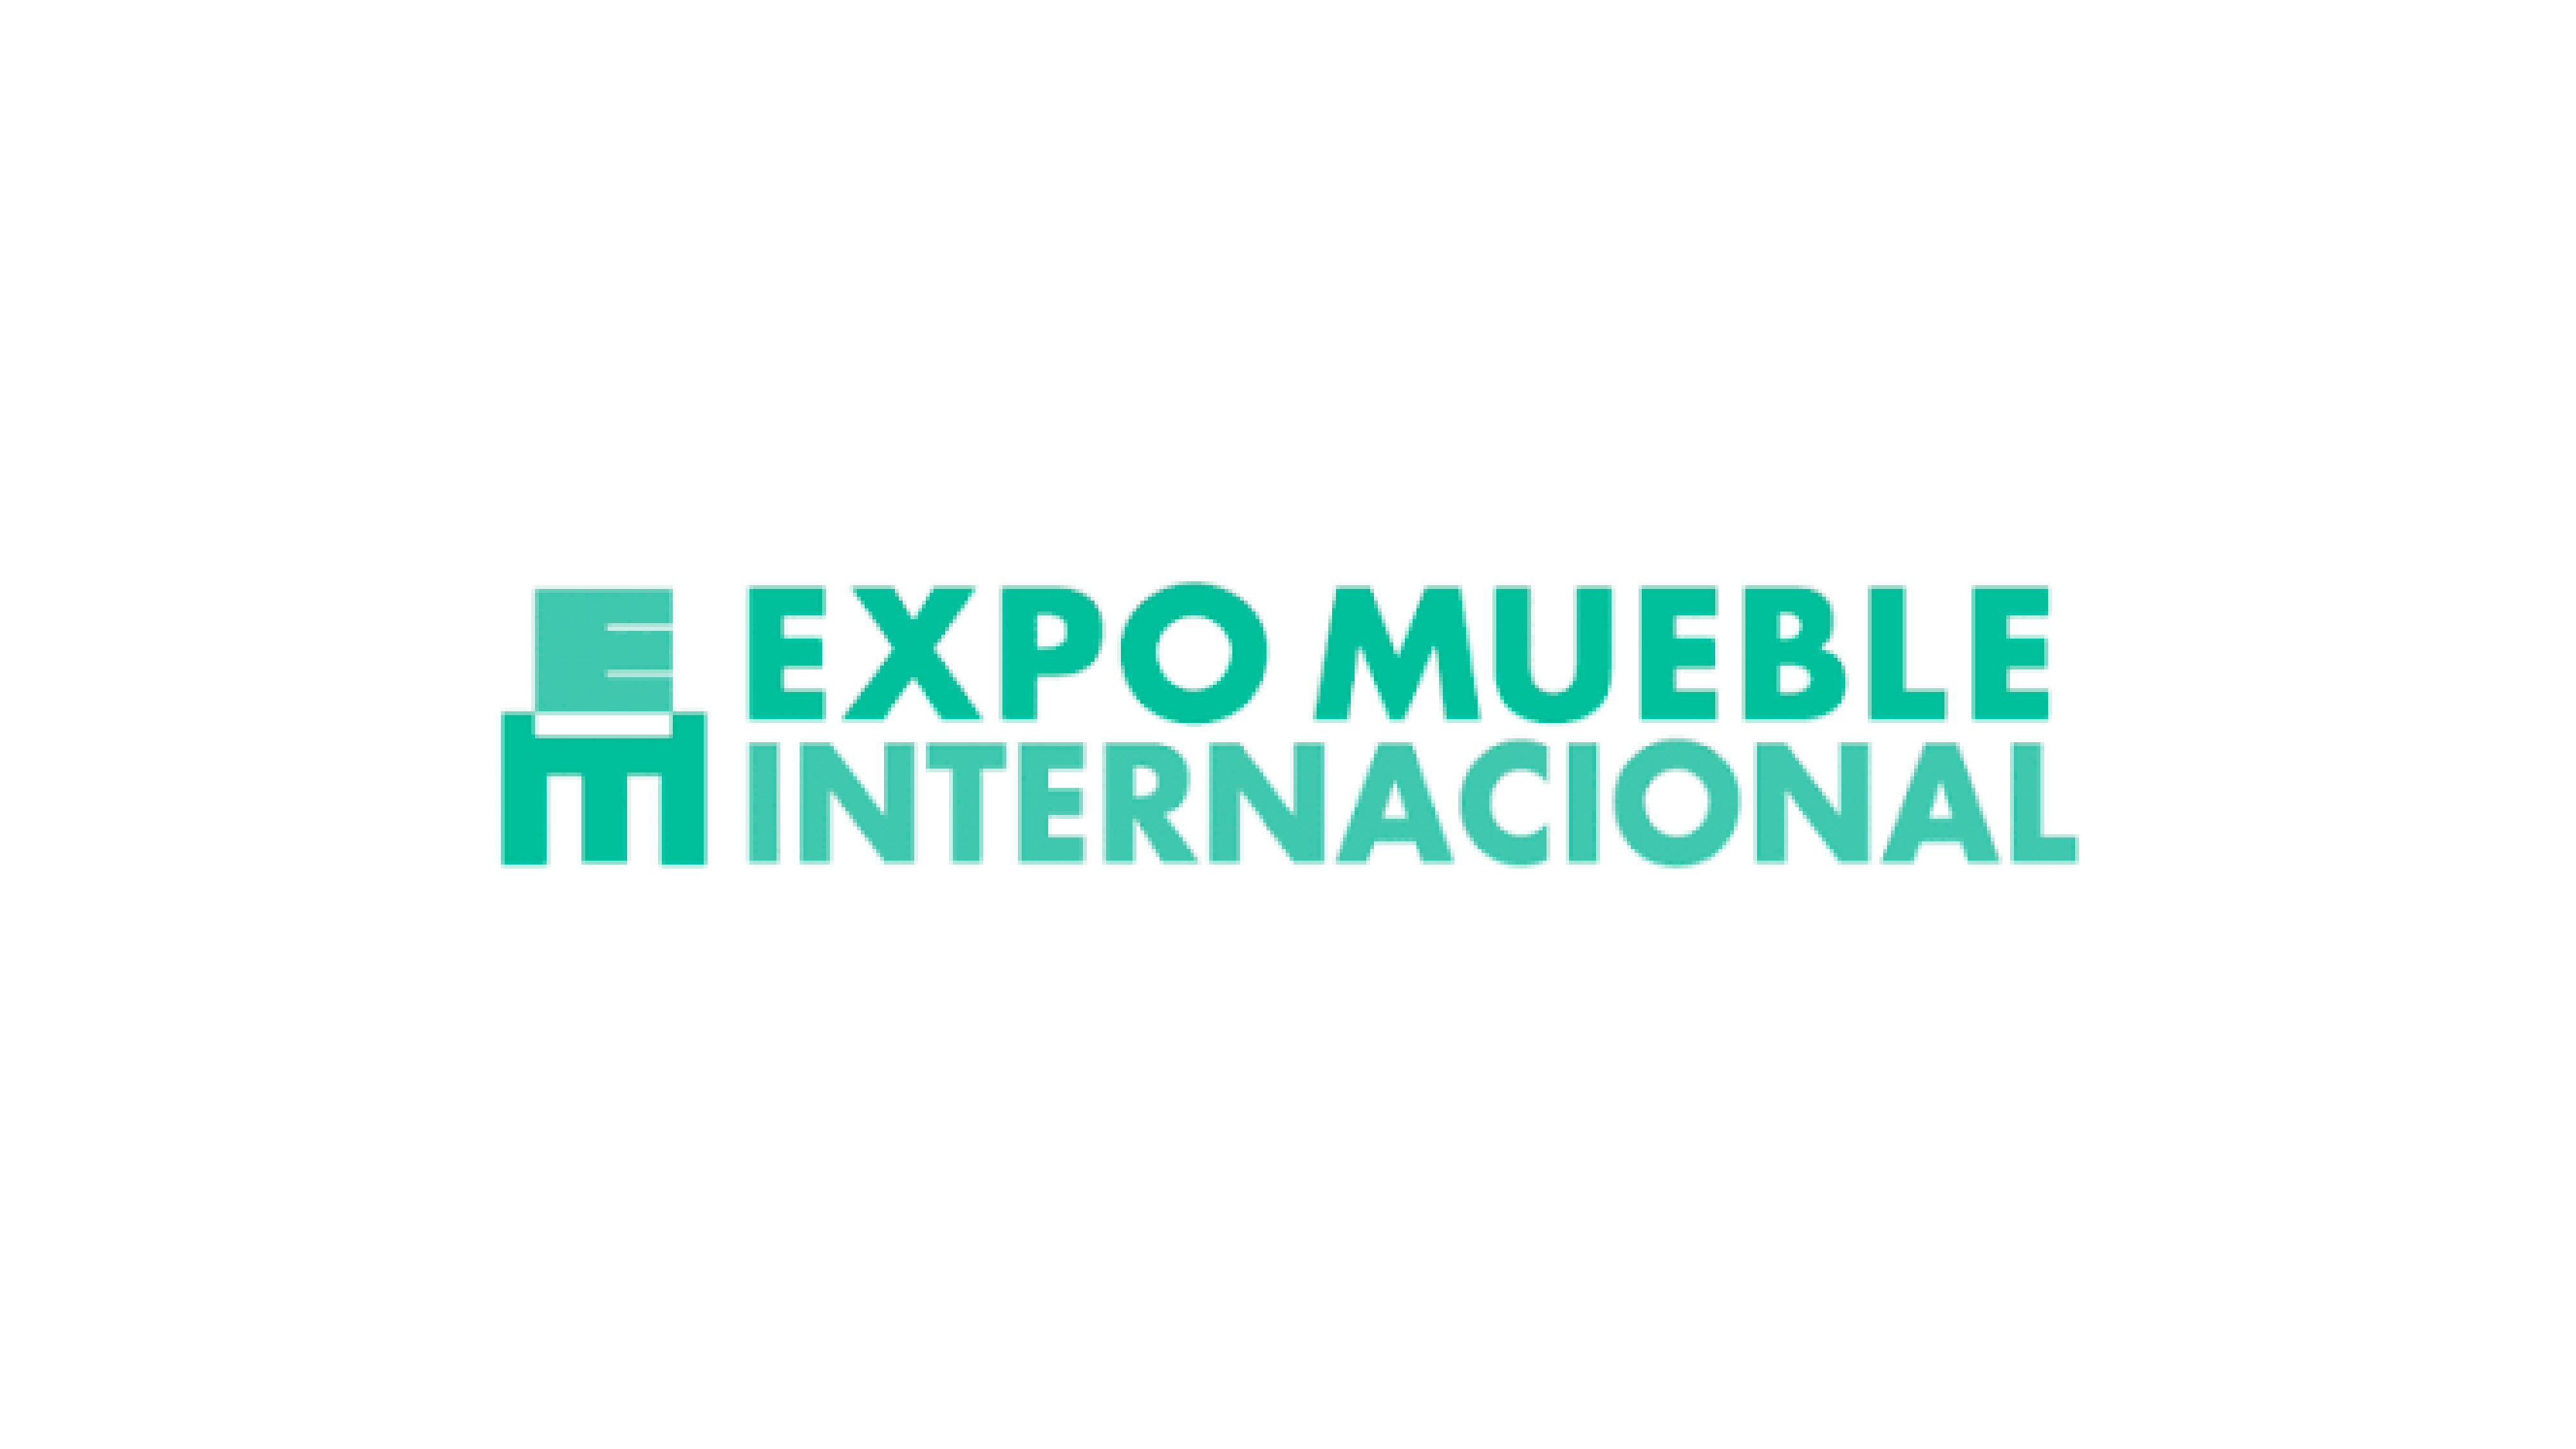 EXPO MUEBLE INTERNACIONAL￼